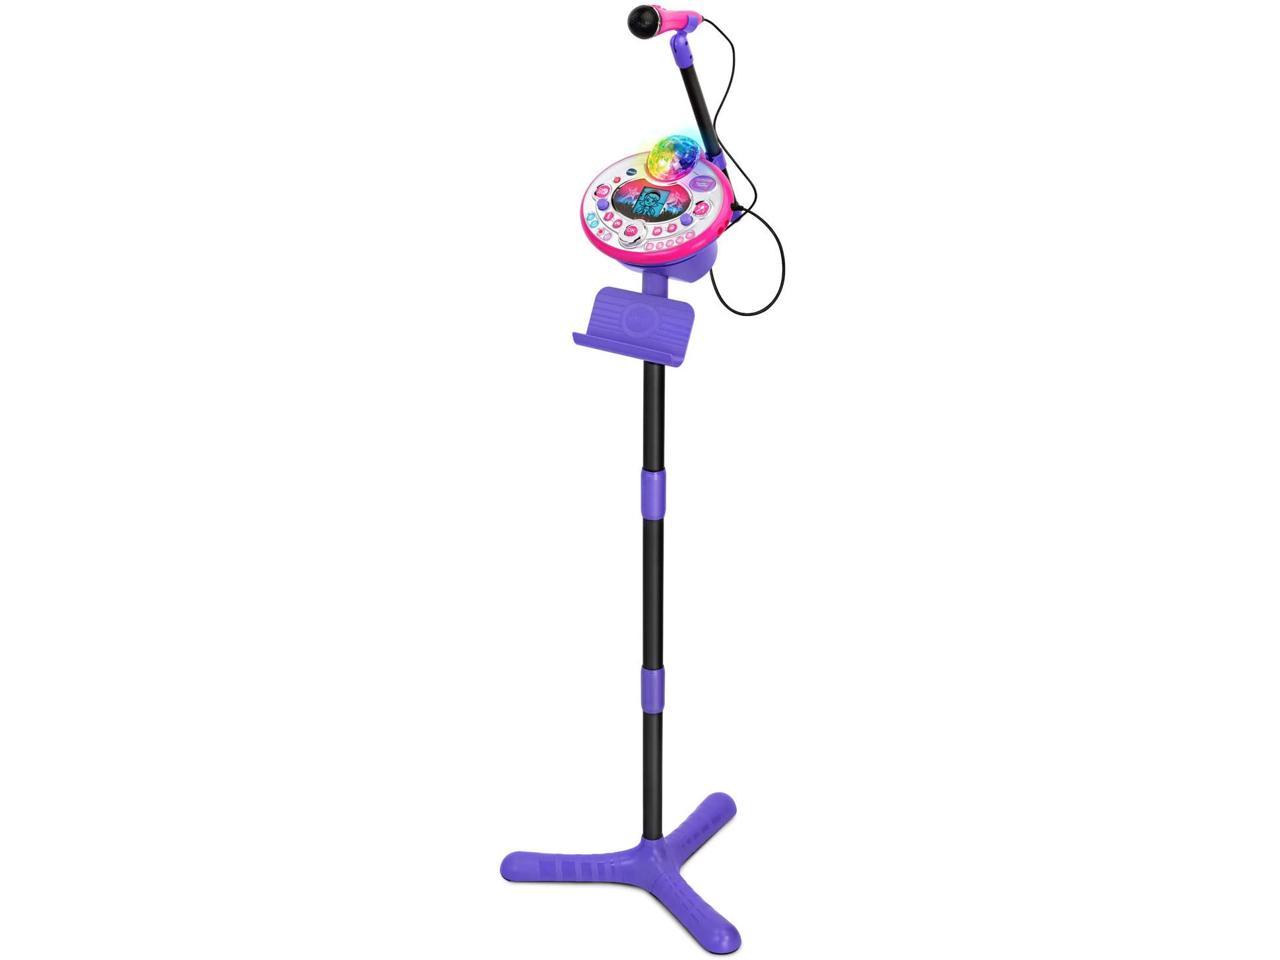 VTech Kidi Star Karaoke Machine (Pink/Purple) - NEW - Newegg.com